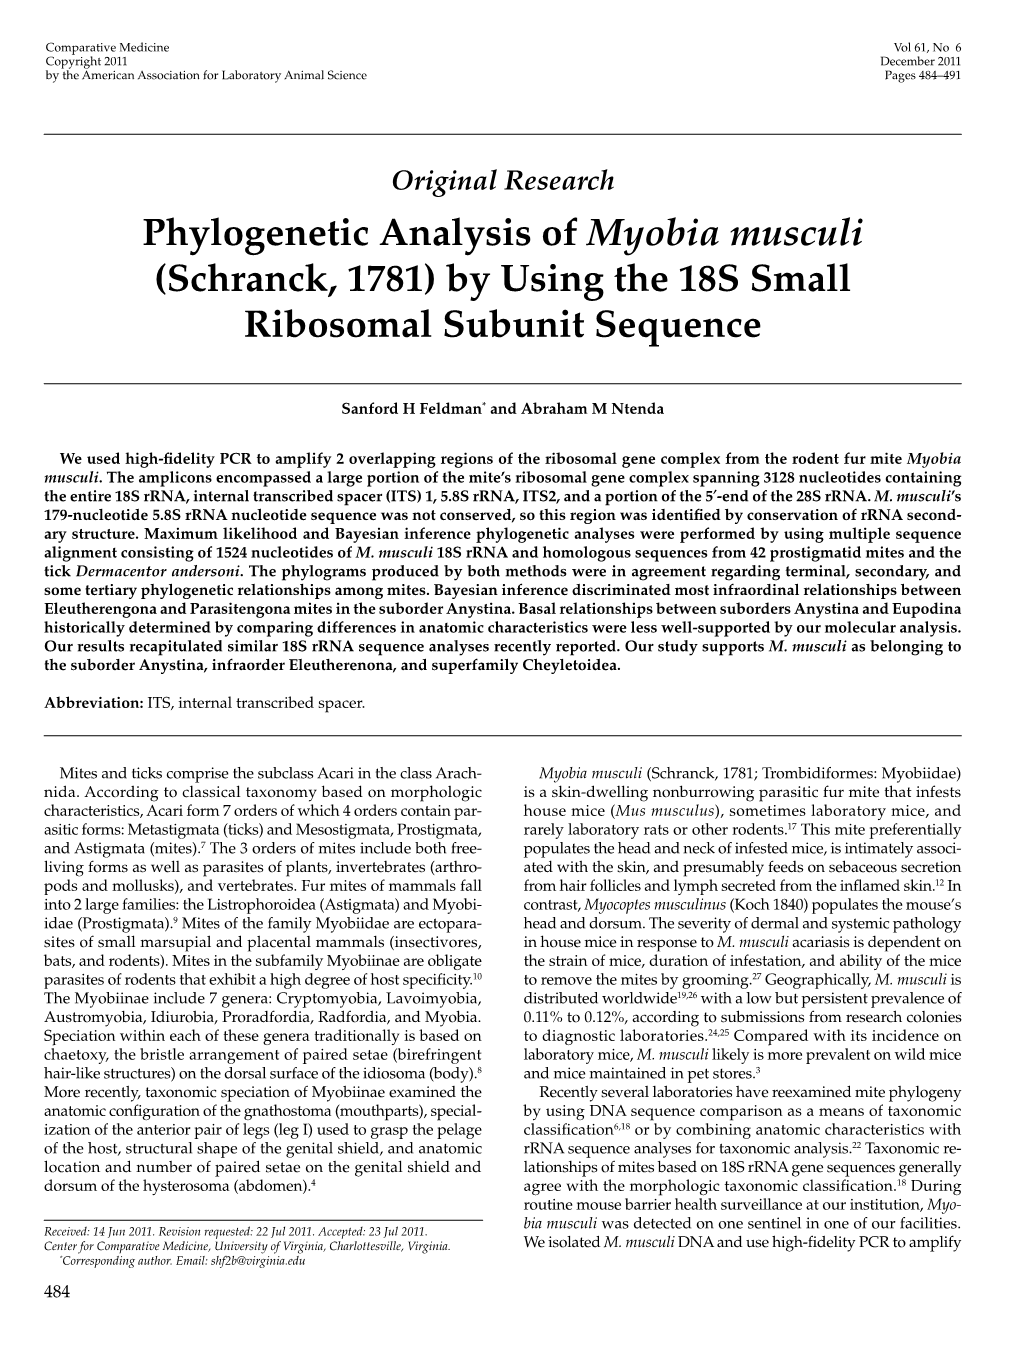 Phylogenetic Analysis of &lt;I&gt;Myobia Musculi&lt;/I&gt;